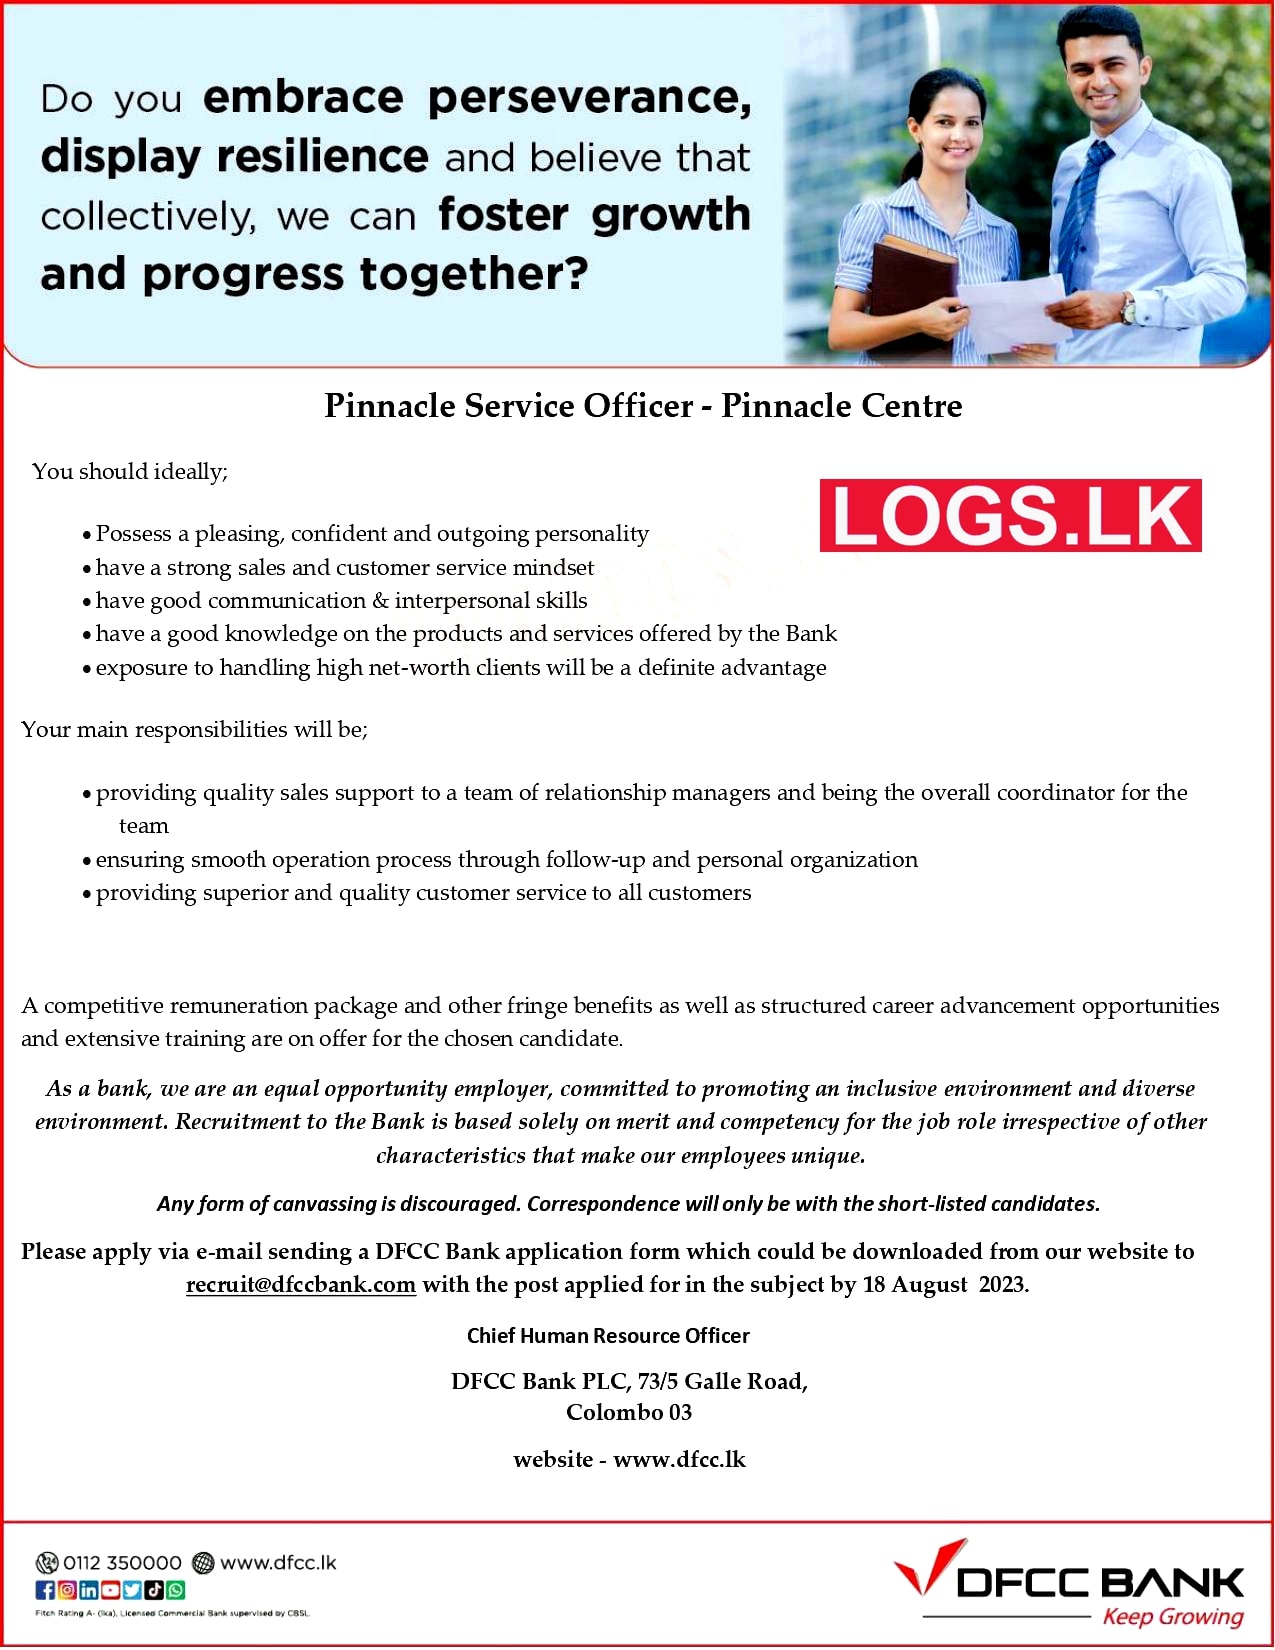 Pinnacle Service Officer Vacancies in DFCC Bank Sri Lanka